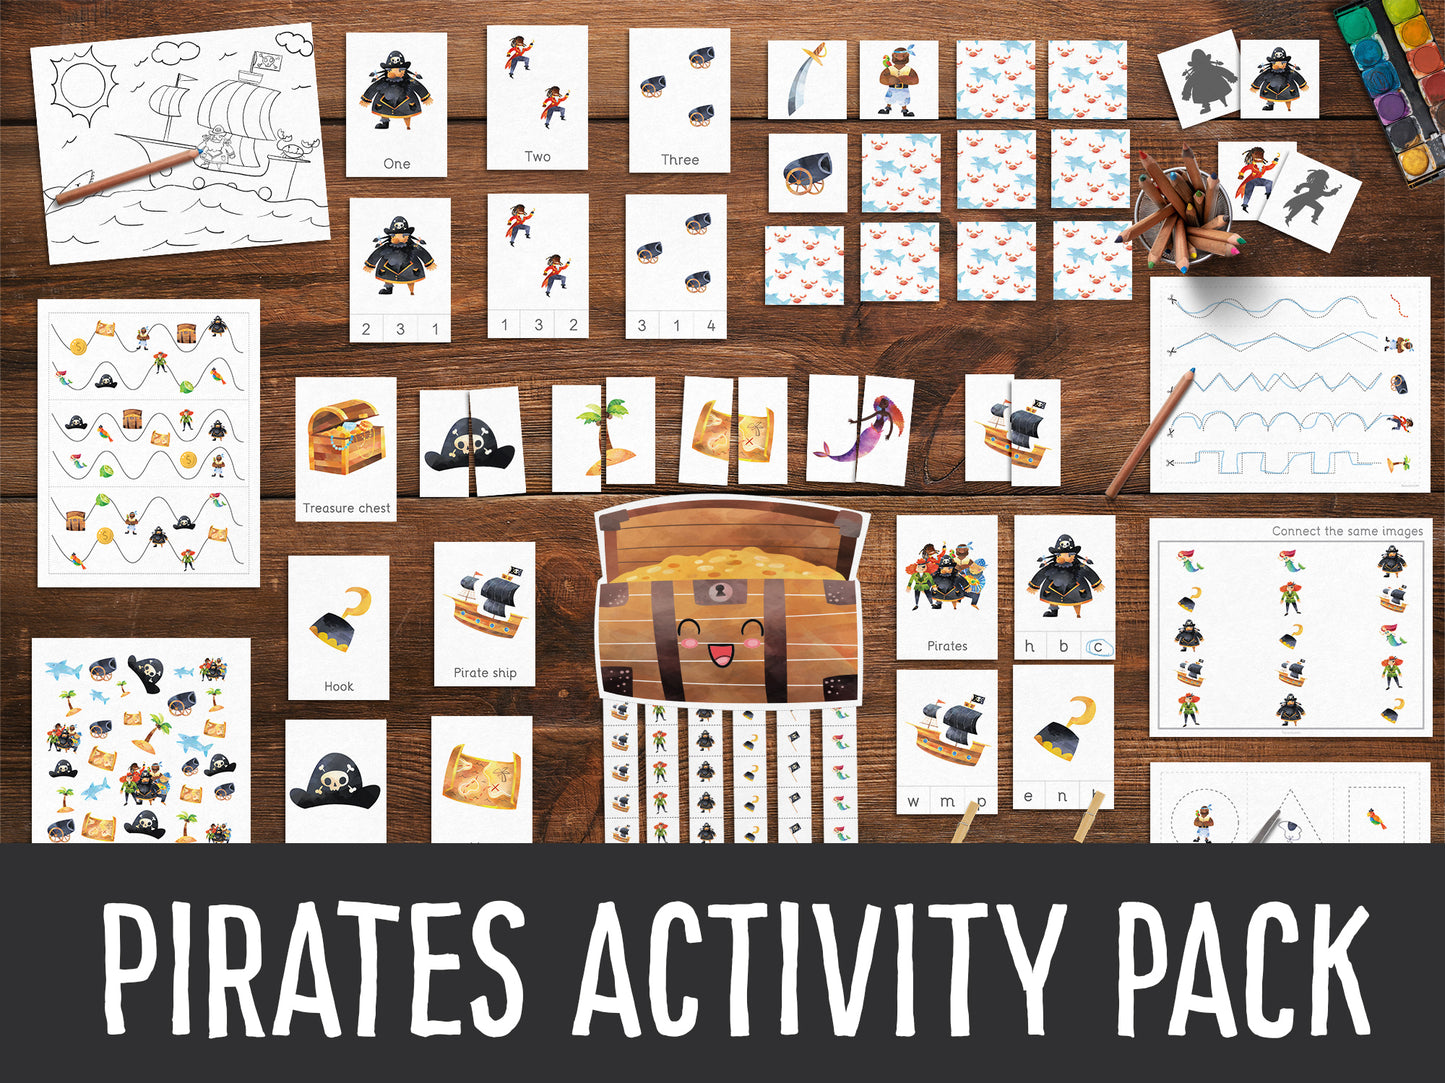 Pirates activity Pack